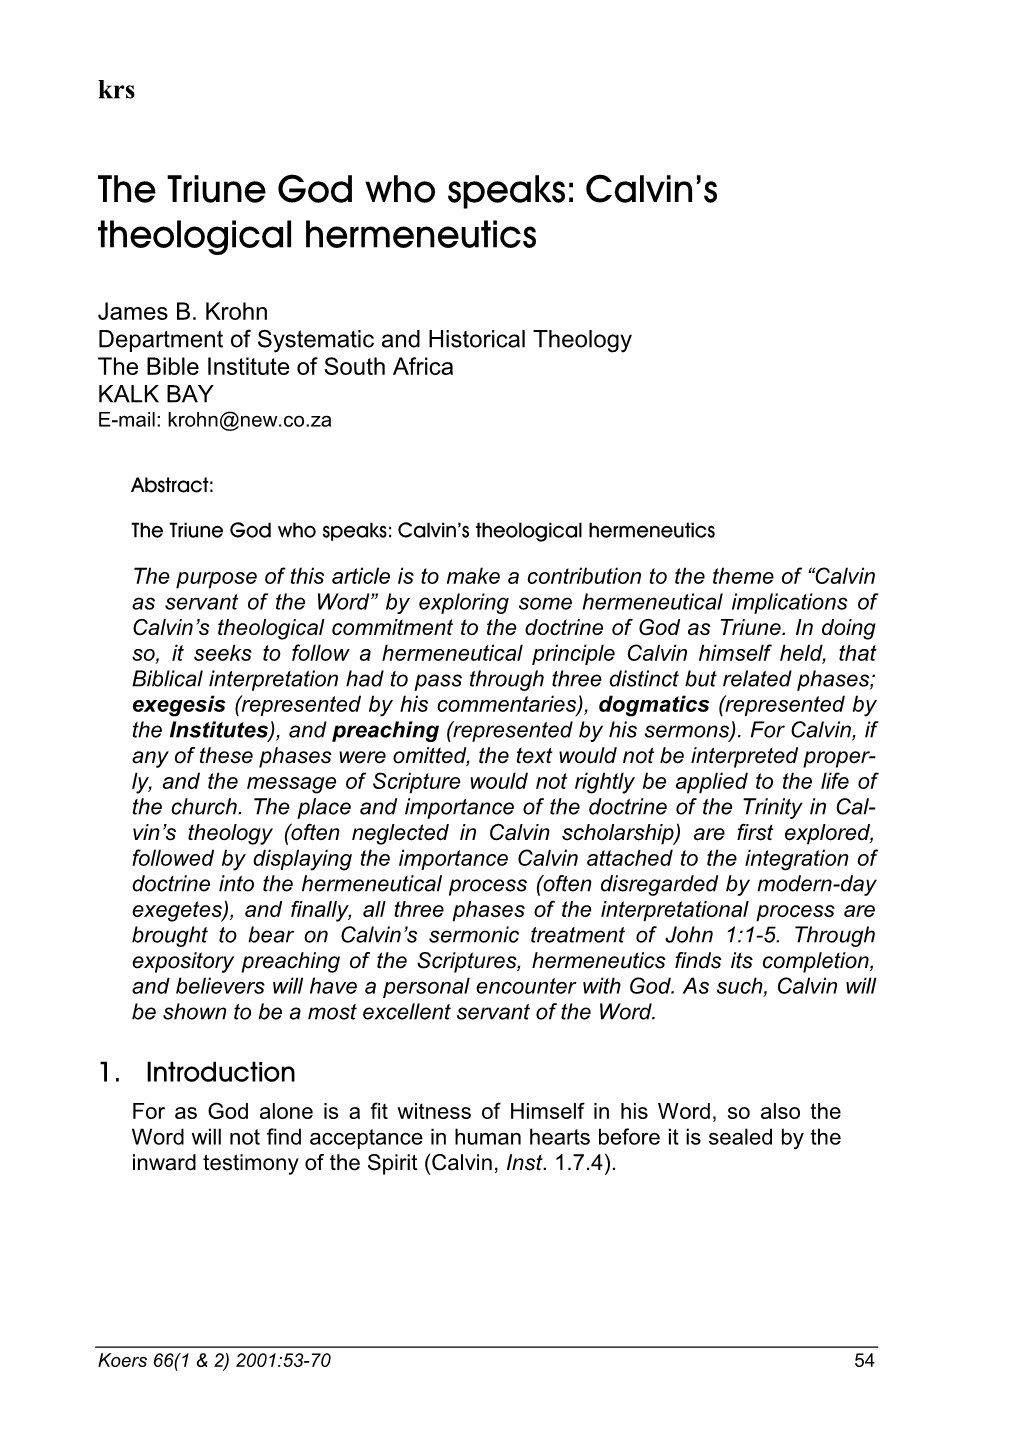 Calvin's Theological Hermeneutics